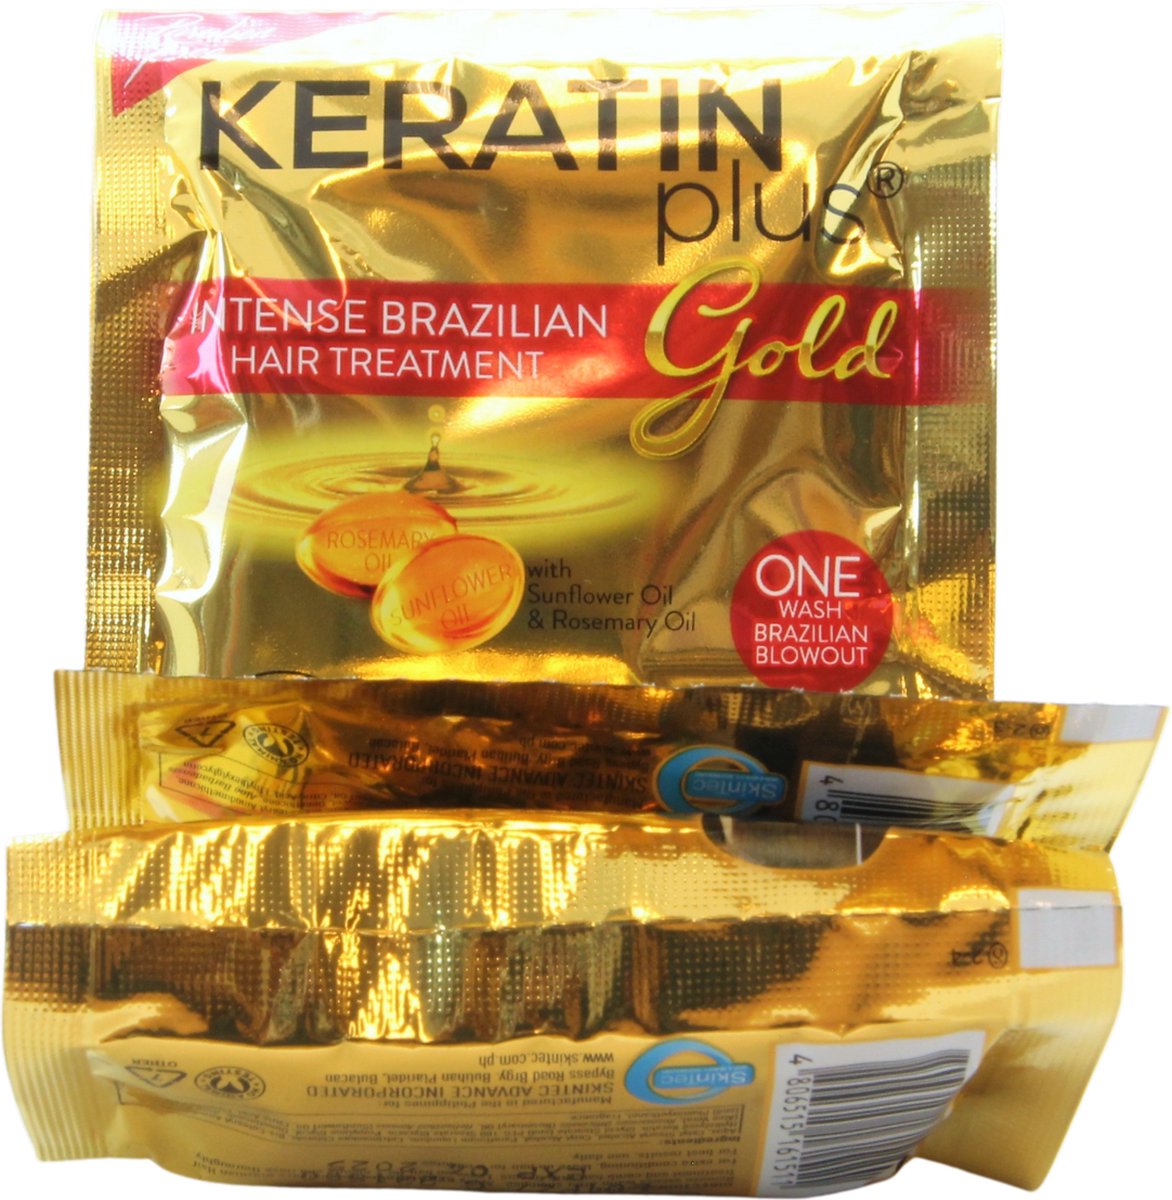 Keratine Plus Intense Brazilian Hair Treatment, 1 x 20 ml GRATIS